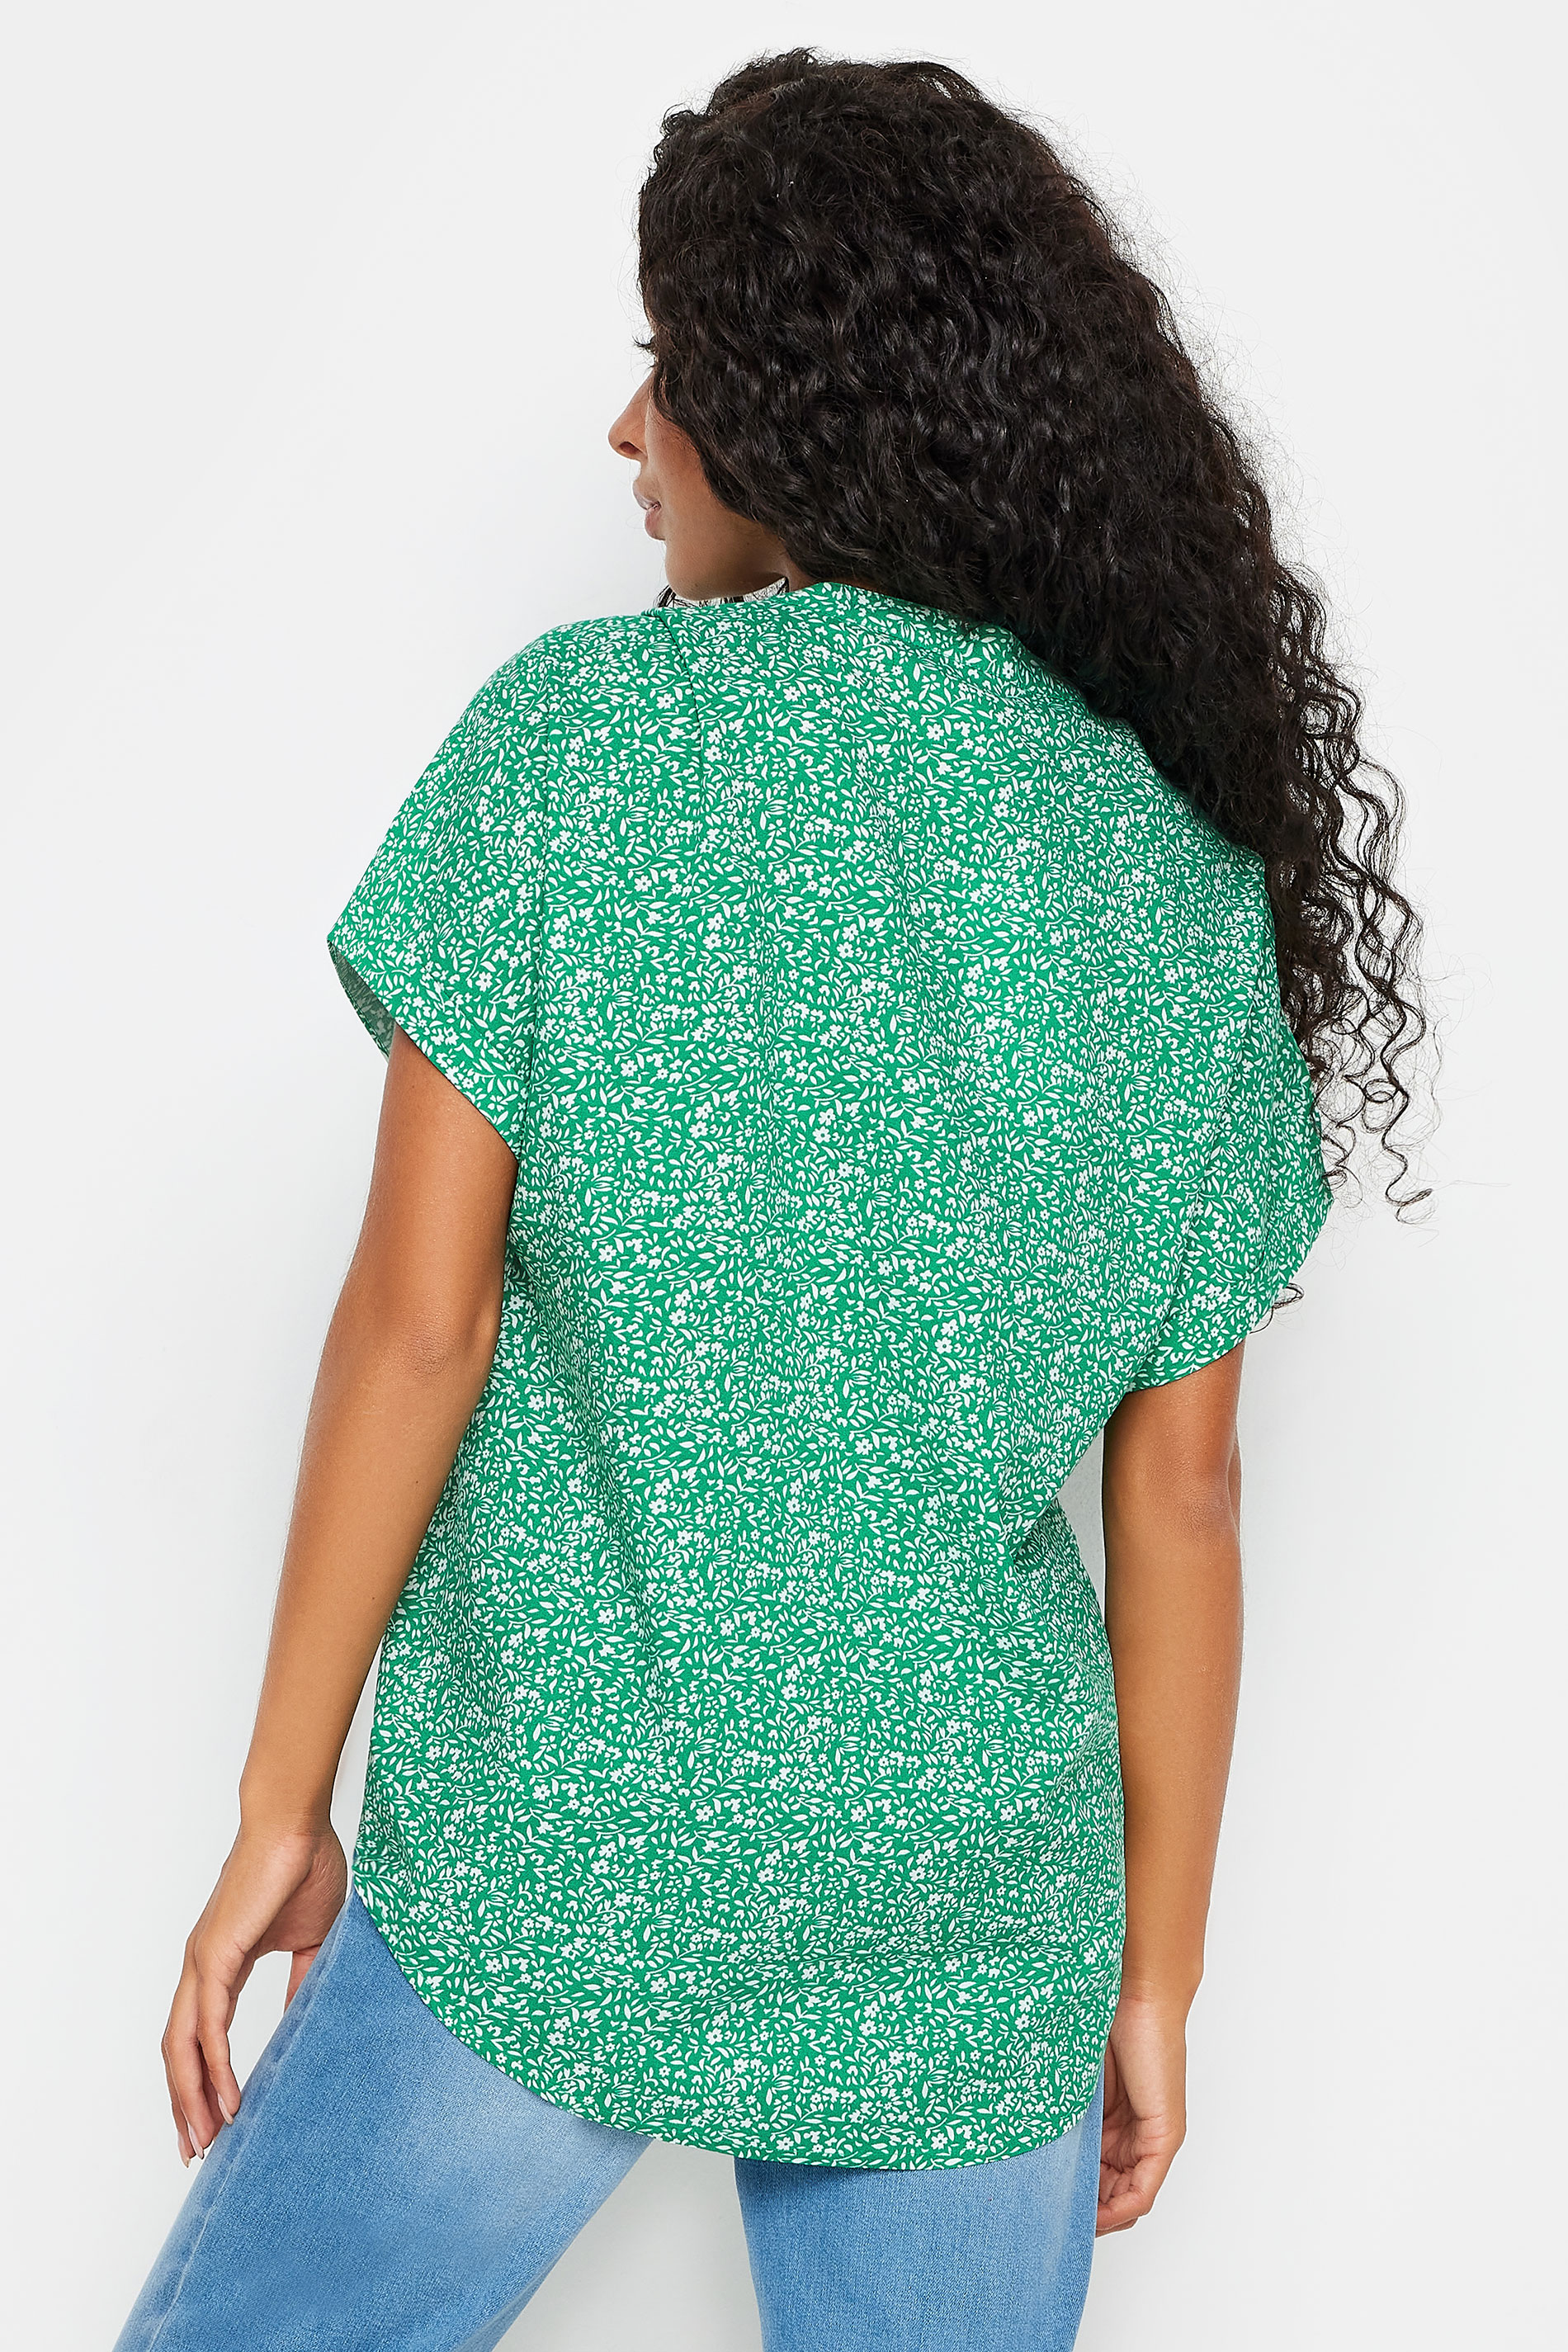 M&Co Petite Green Ditsy Floral Print Button Through Shirt | M&Co 3